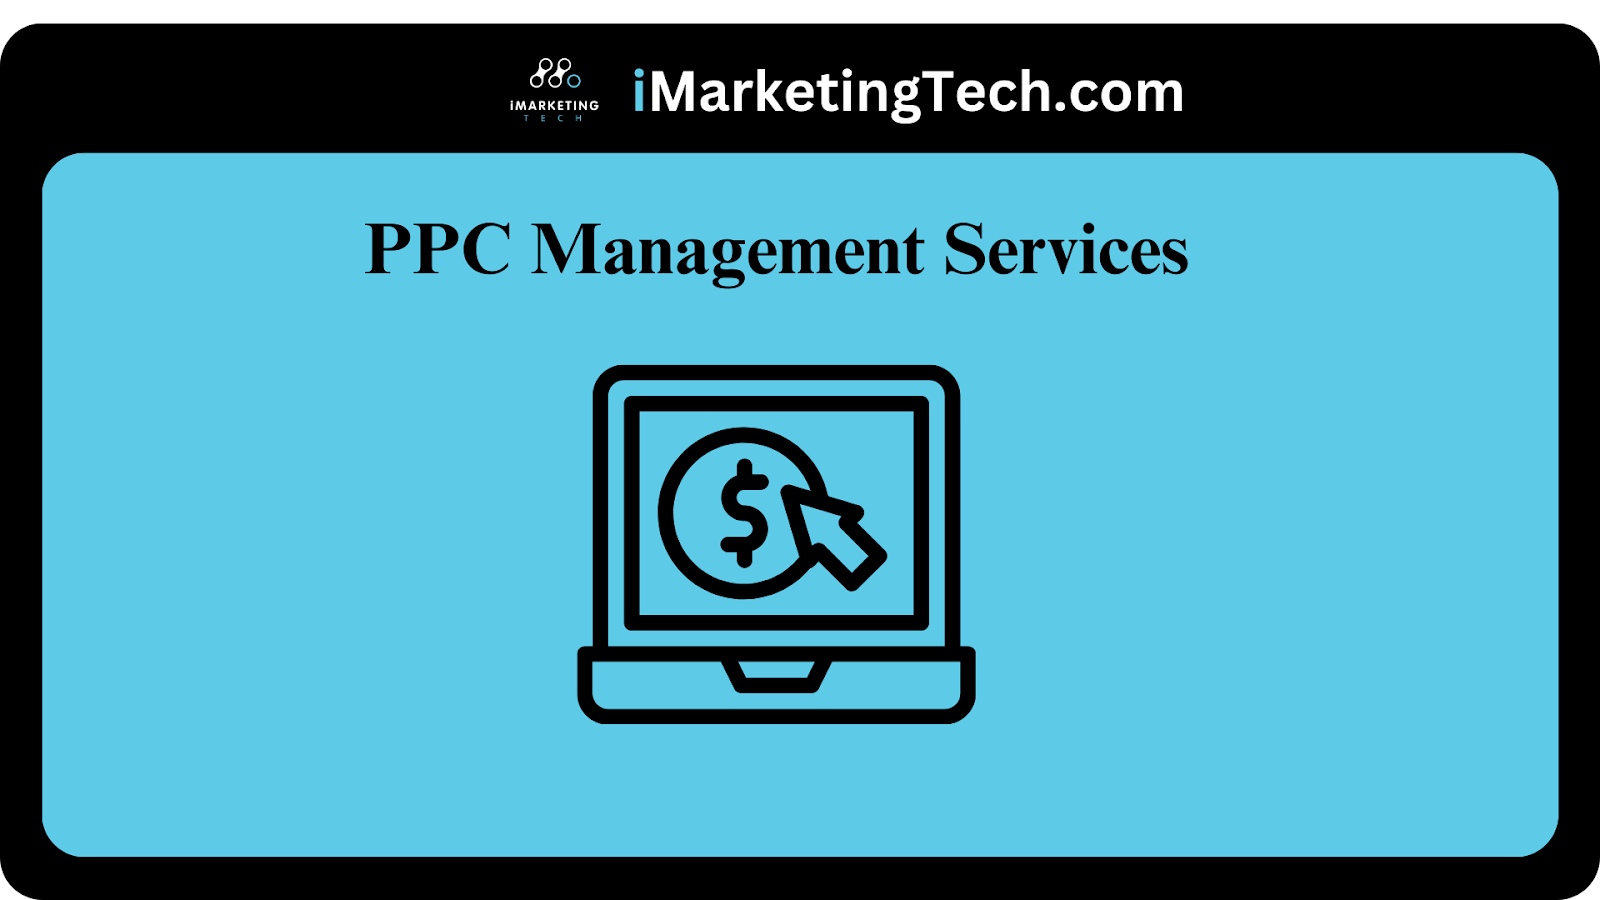 Pay-Per-Click (PPC) Management